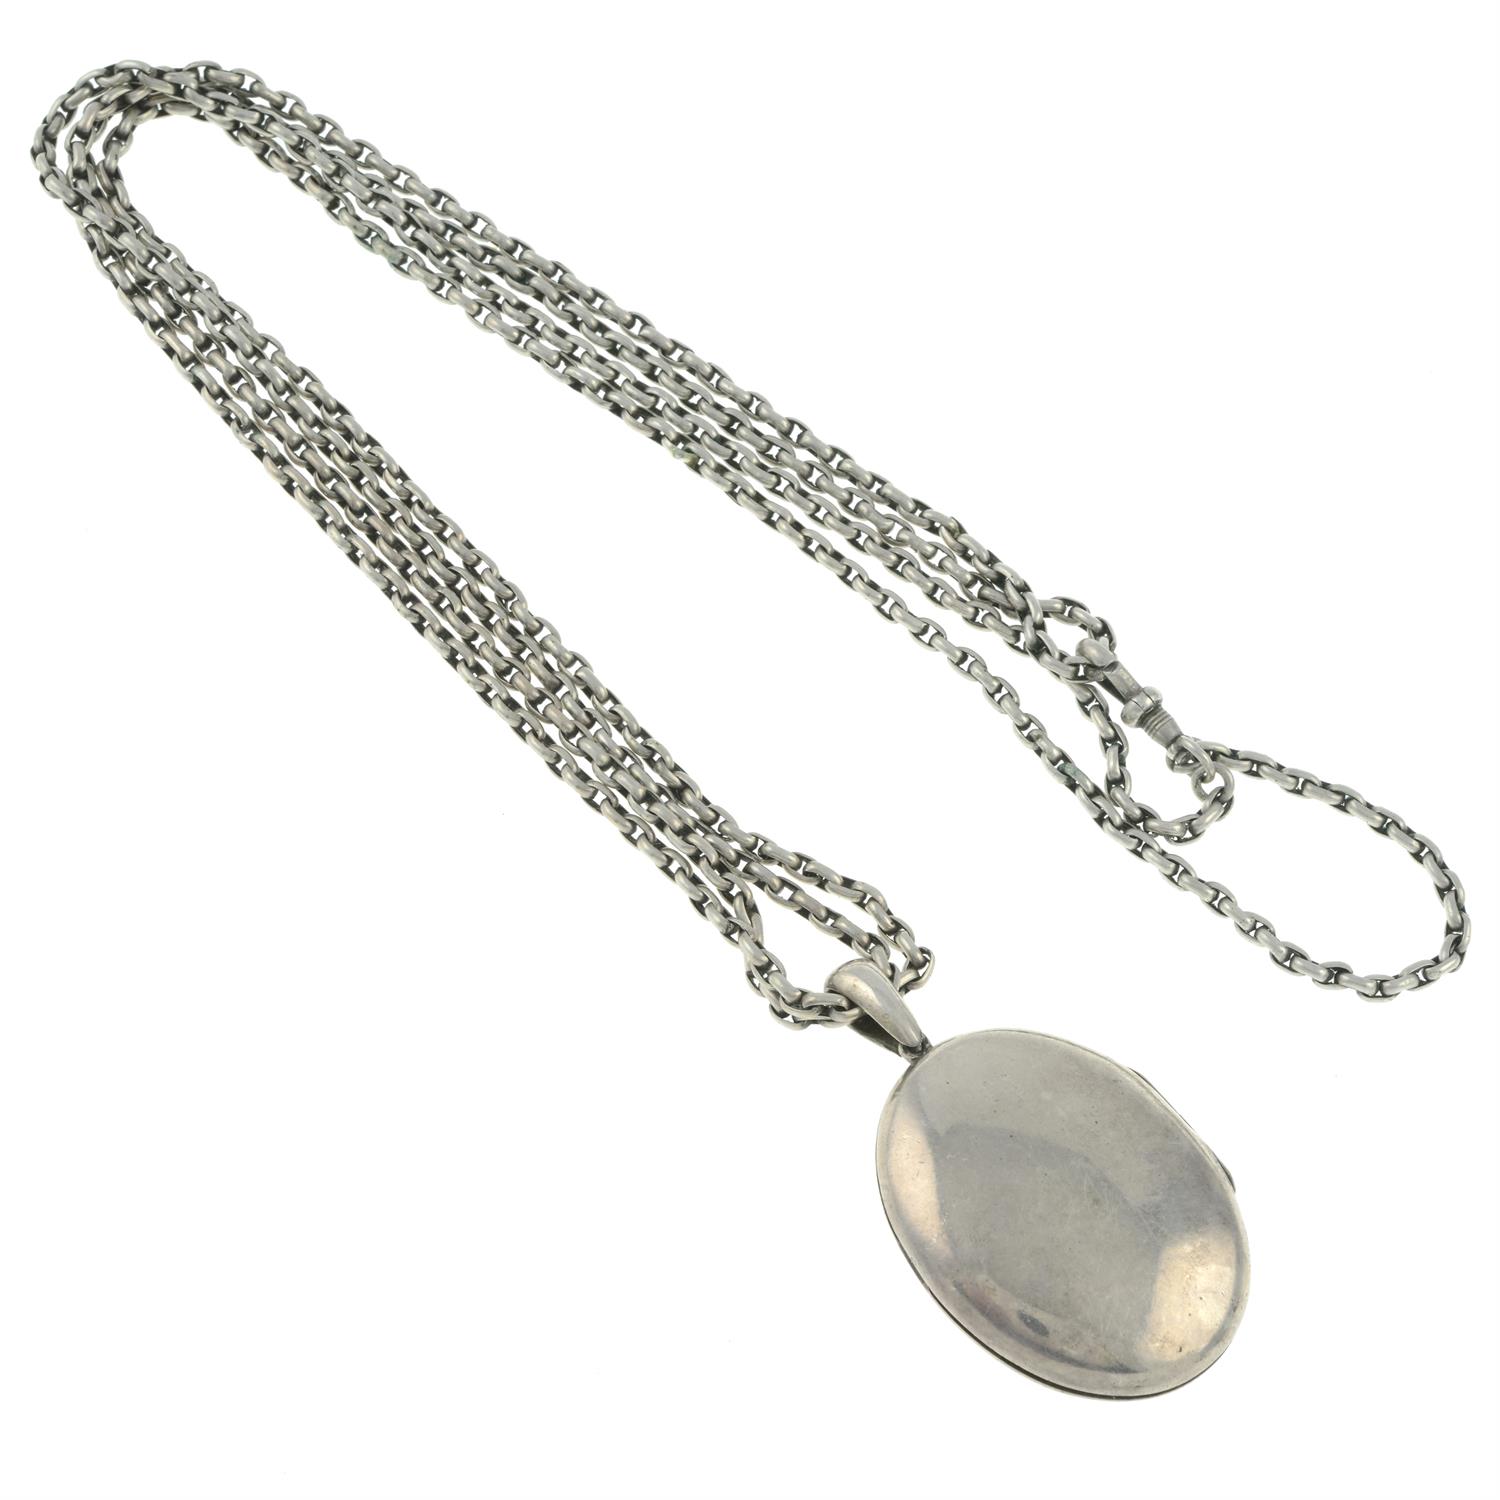 Victorian locket pendant & longuard chain - Image 3 of 3